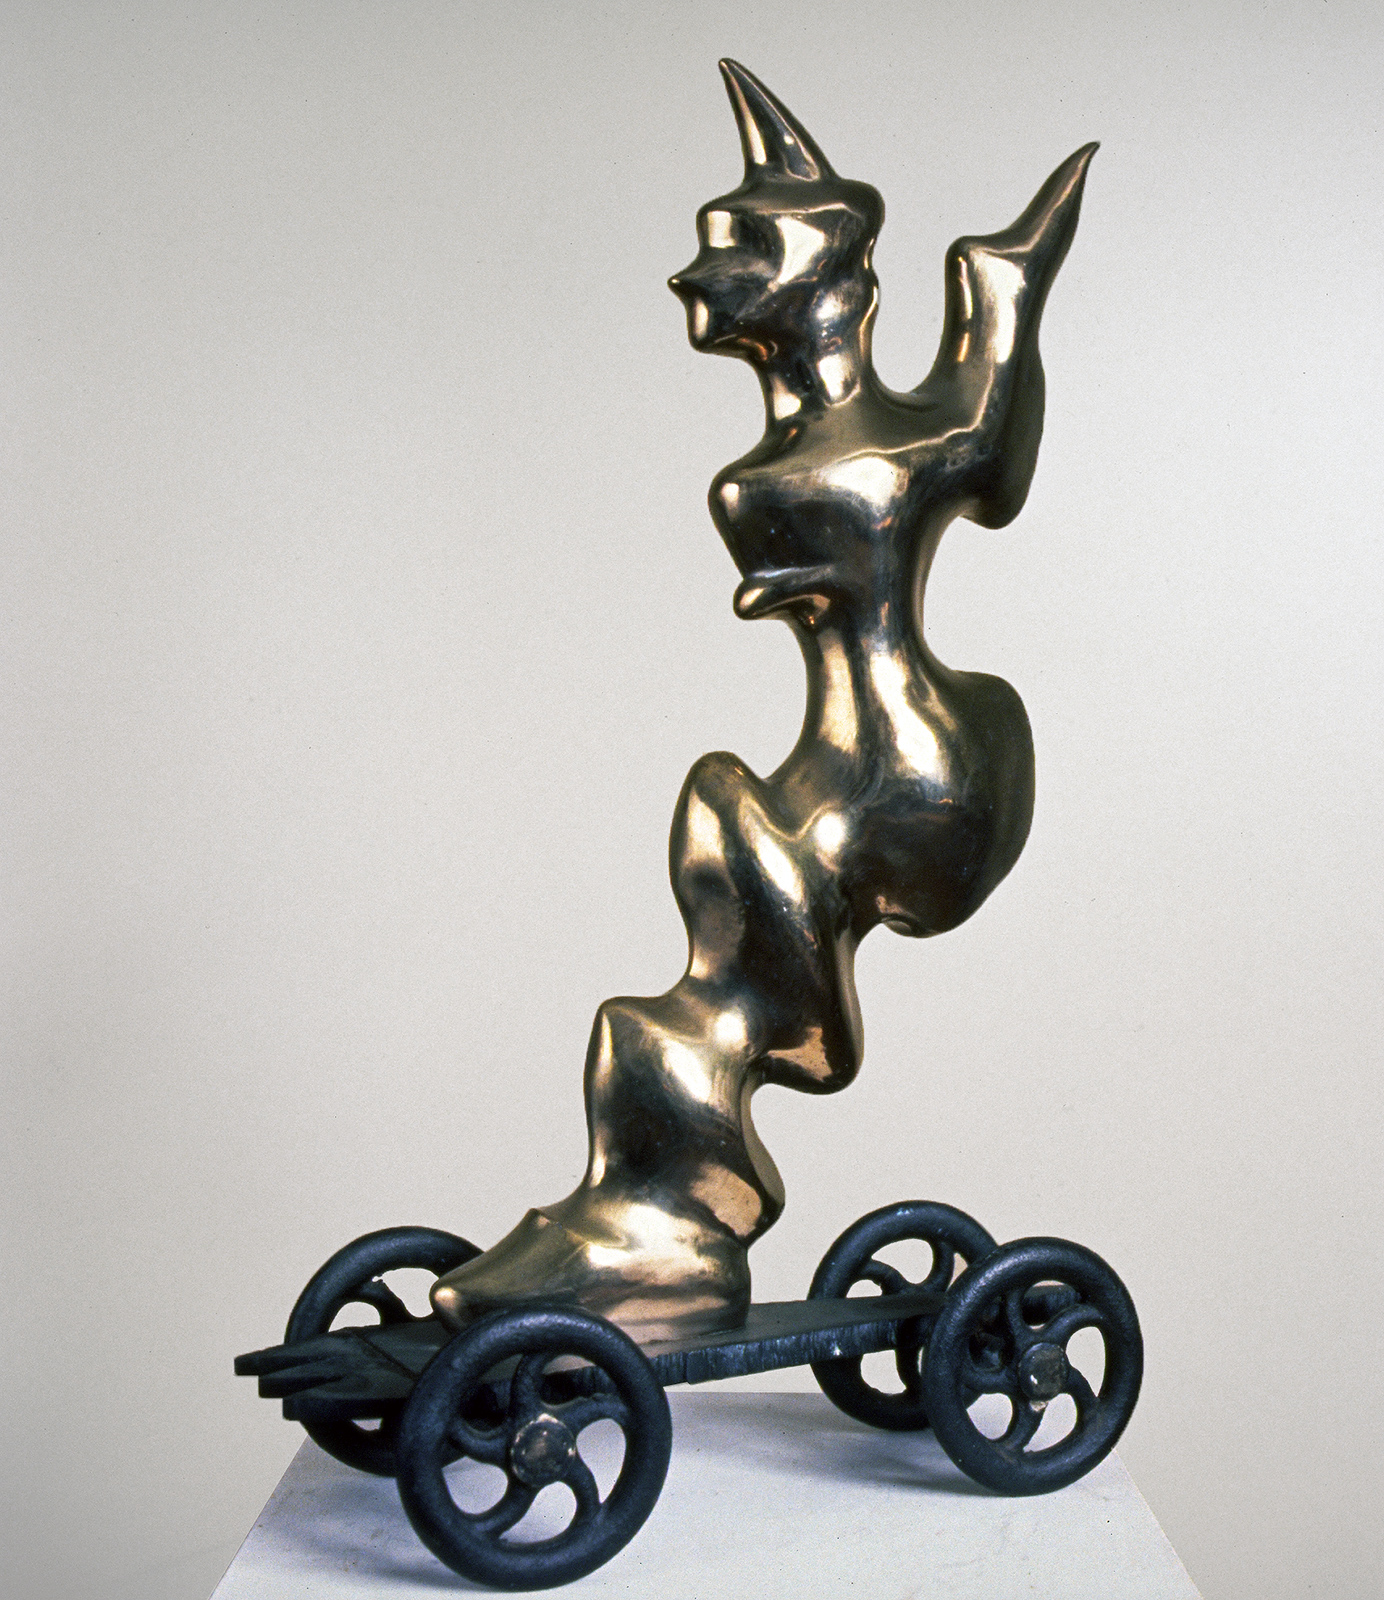 Flux, 1991, sculpture by Adrian Mauriks.